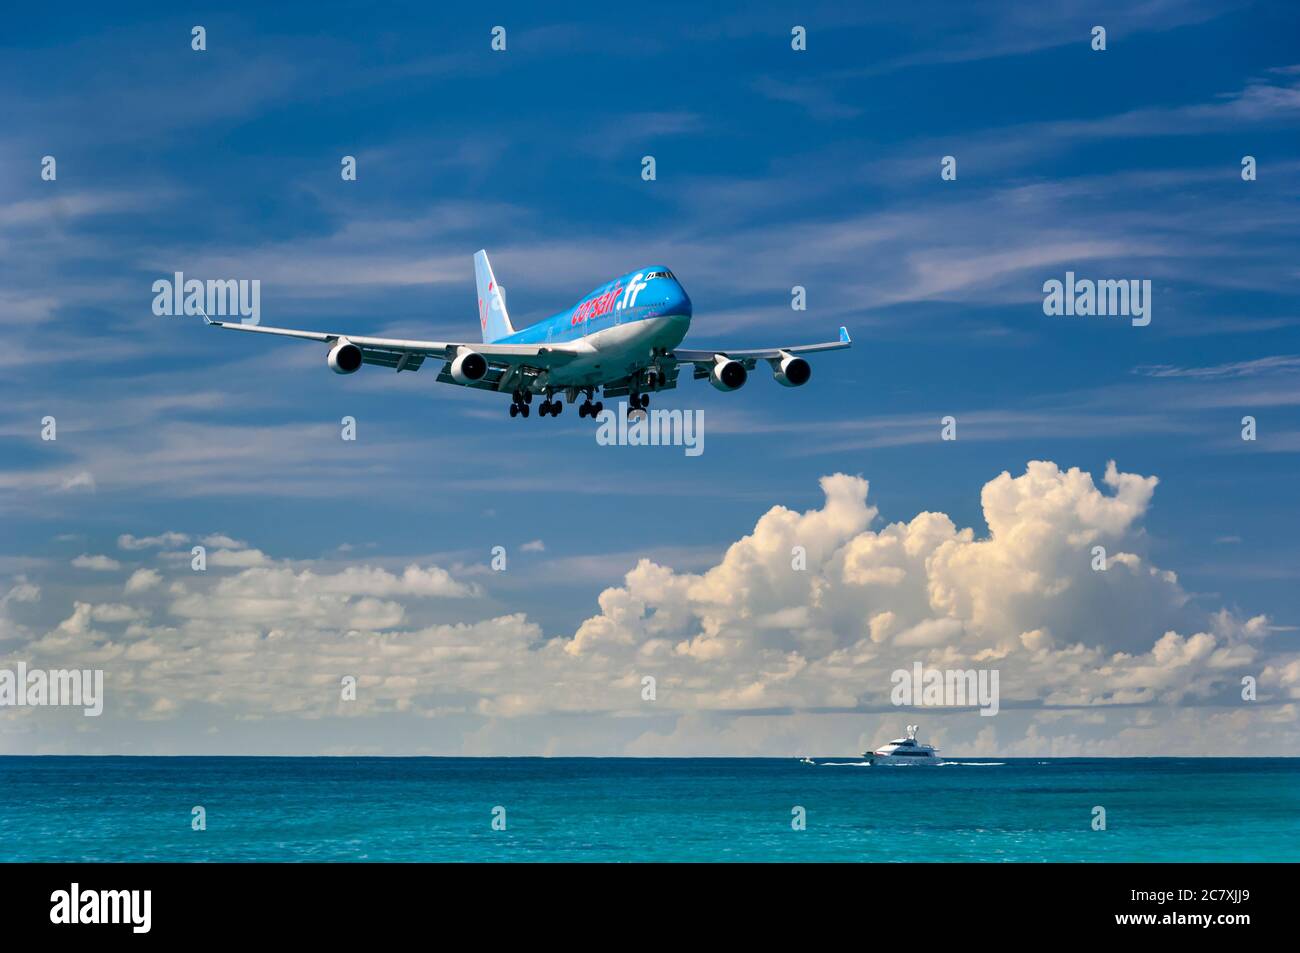 A Corsair Boeing 747 landing at Saint Maarten, airport, Caribbean, West Indies. Stock Photo